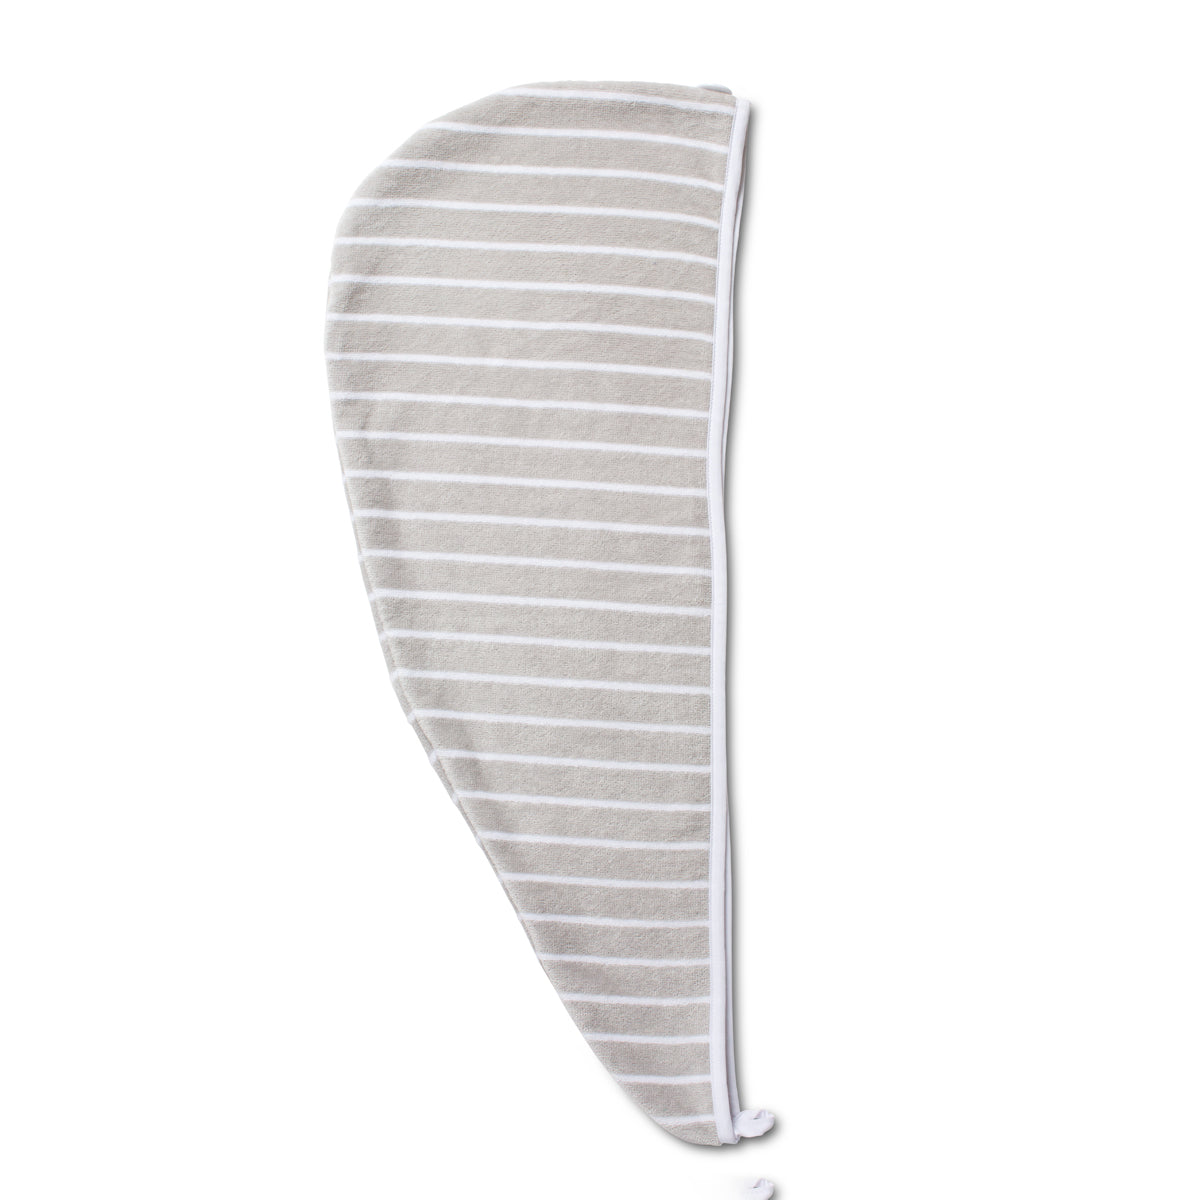 Flat lay of Swoodi hair towel in grey and white stripe